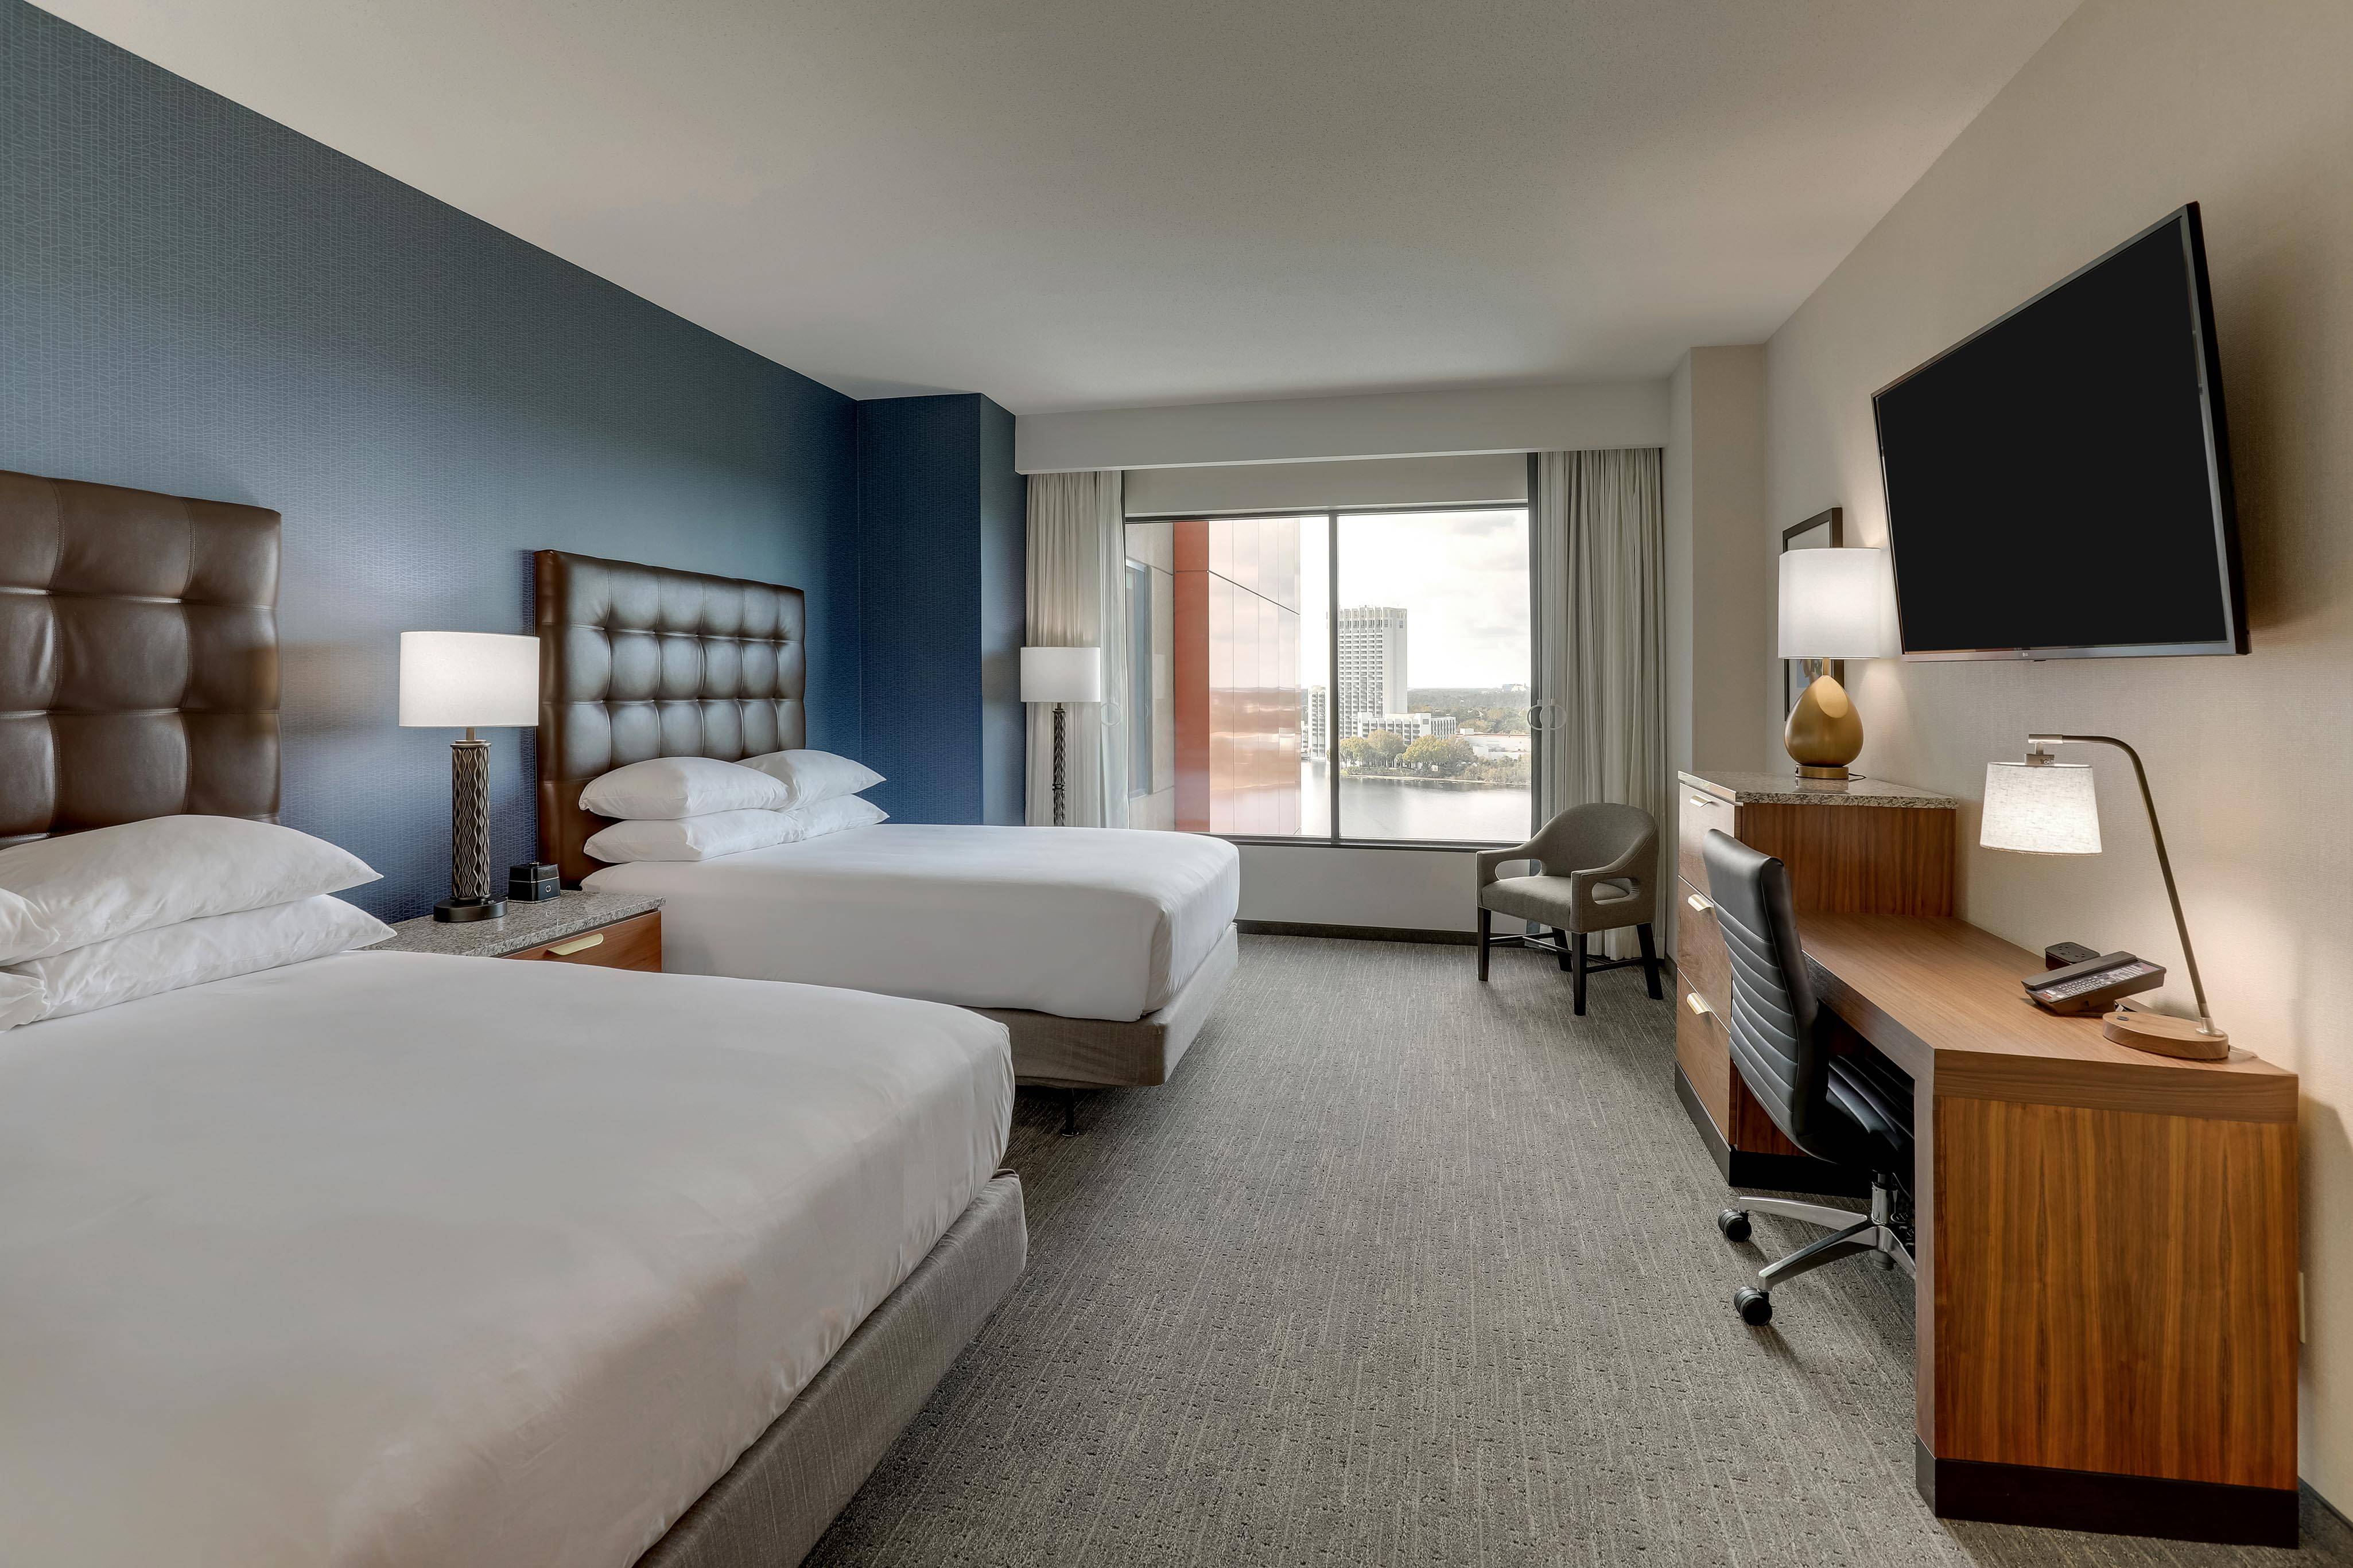 Drury Plaza Hotel Orlando overview